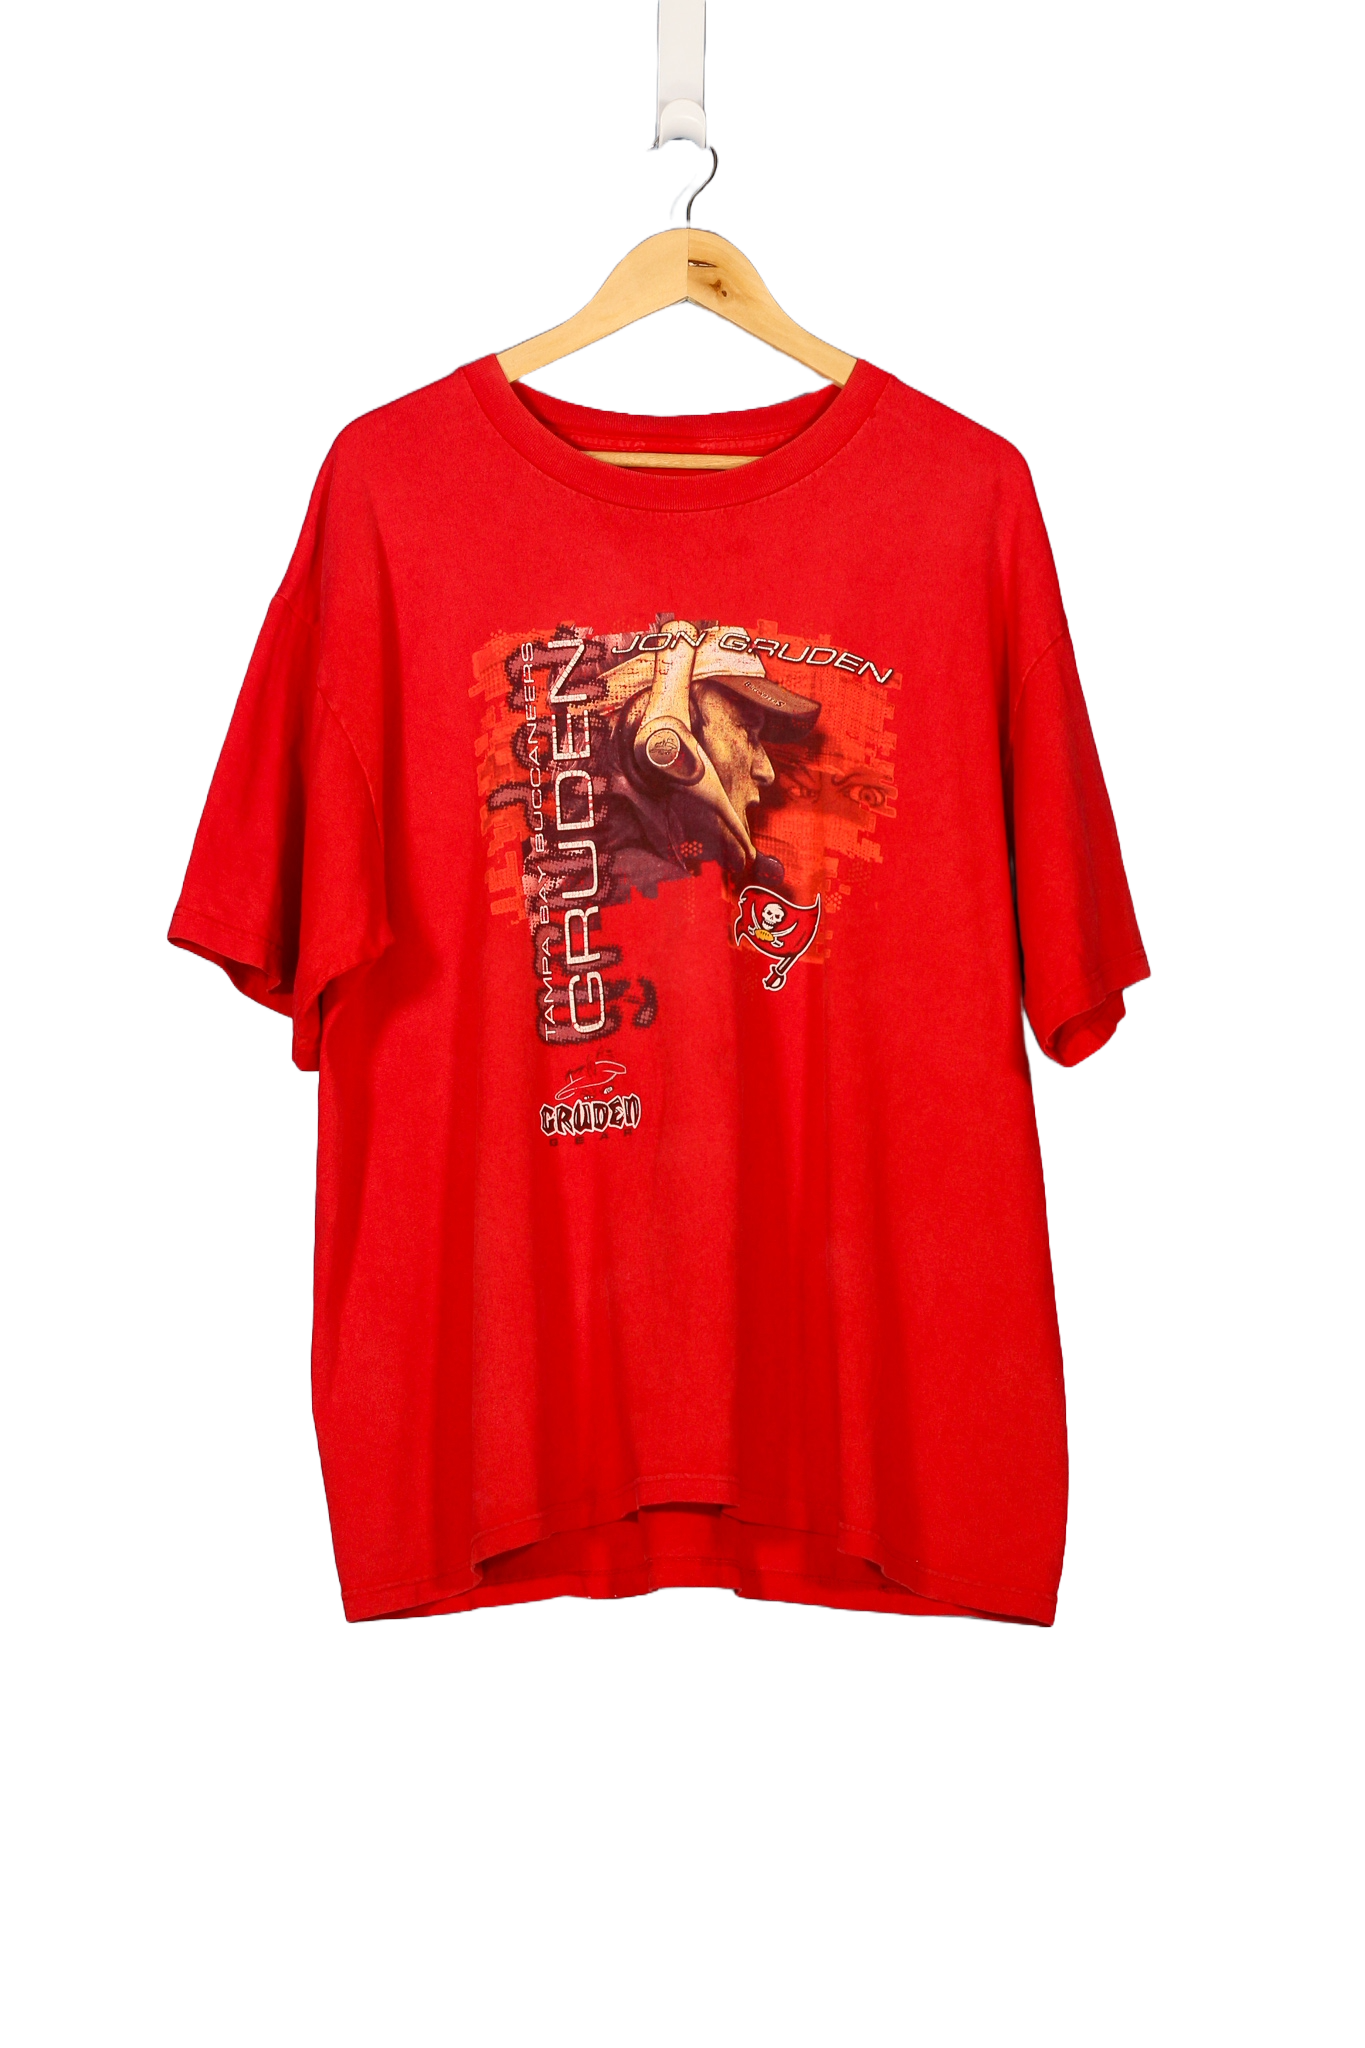 Vintage Tampa Bay Buccaneers Jon Gruden NFL T-Shirt - XL